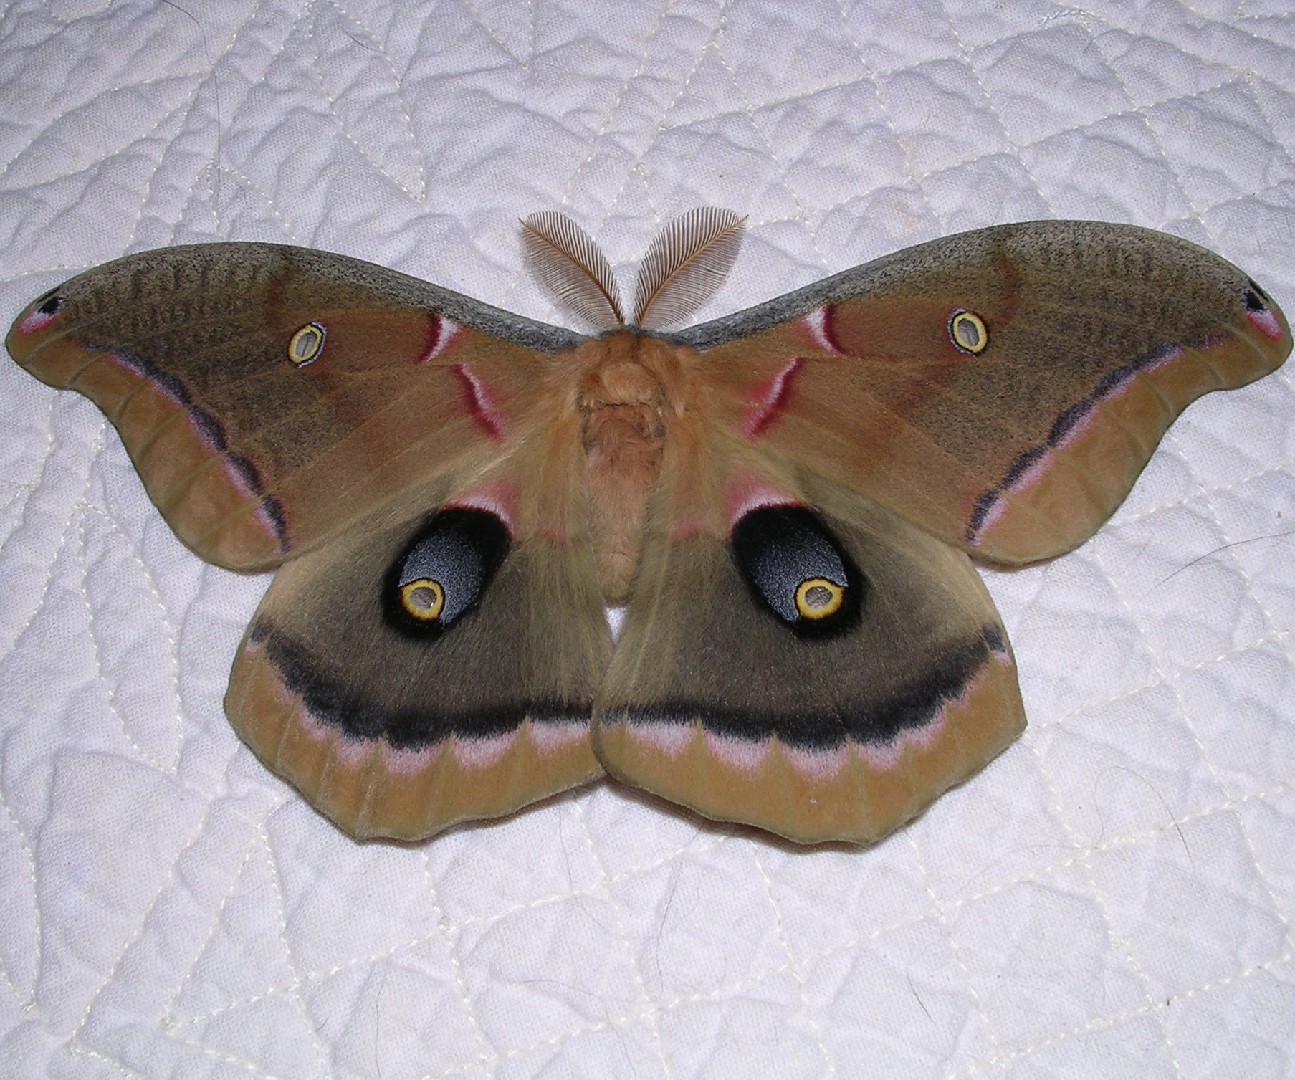 Tussar moths (Antheraea)